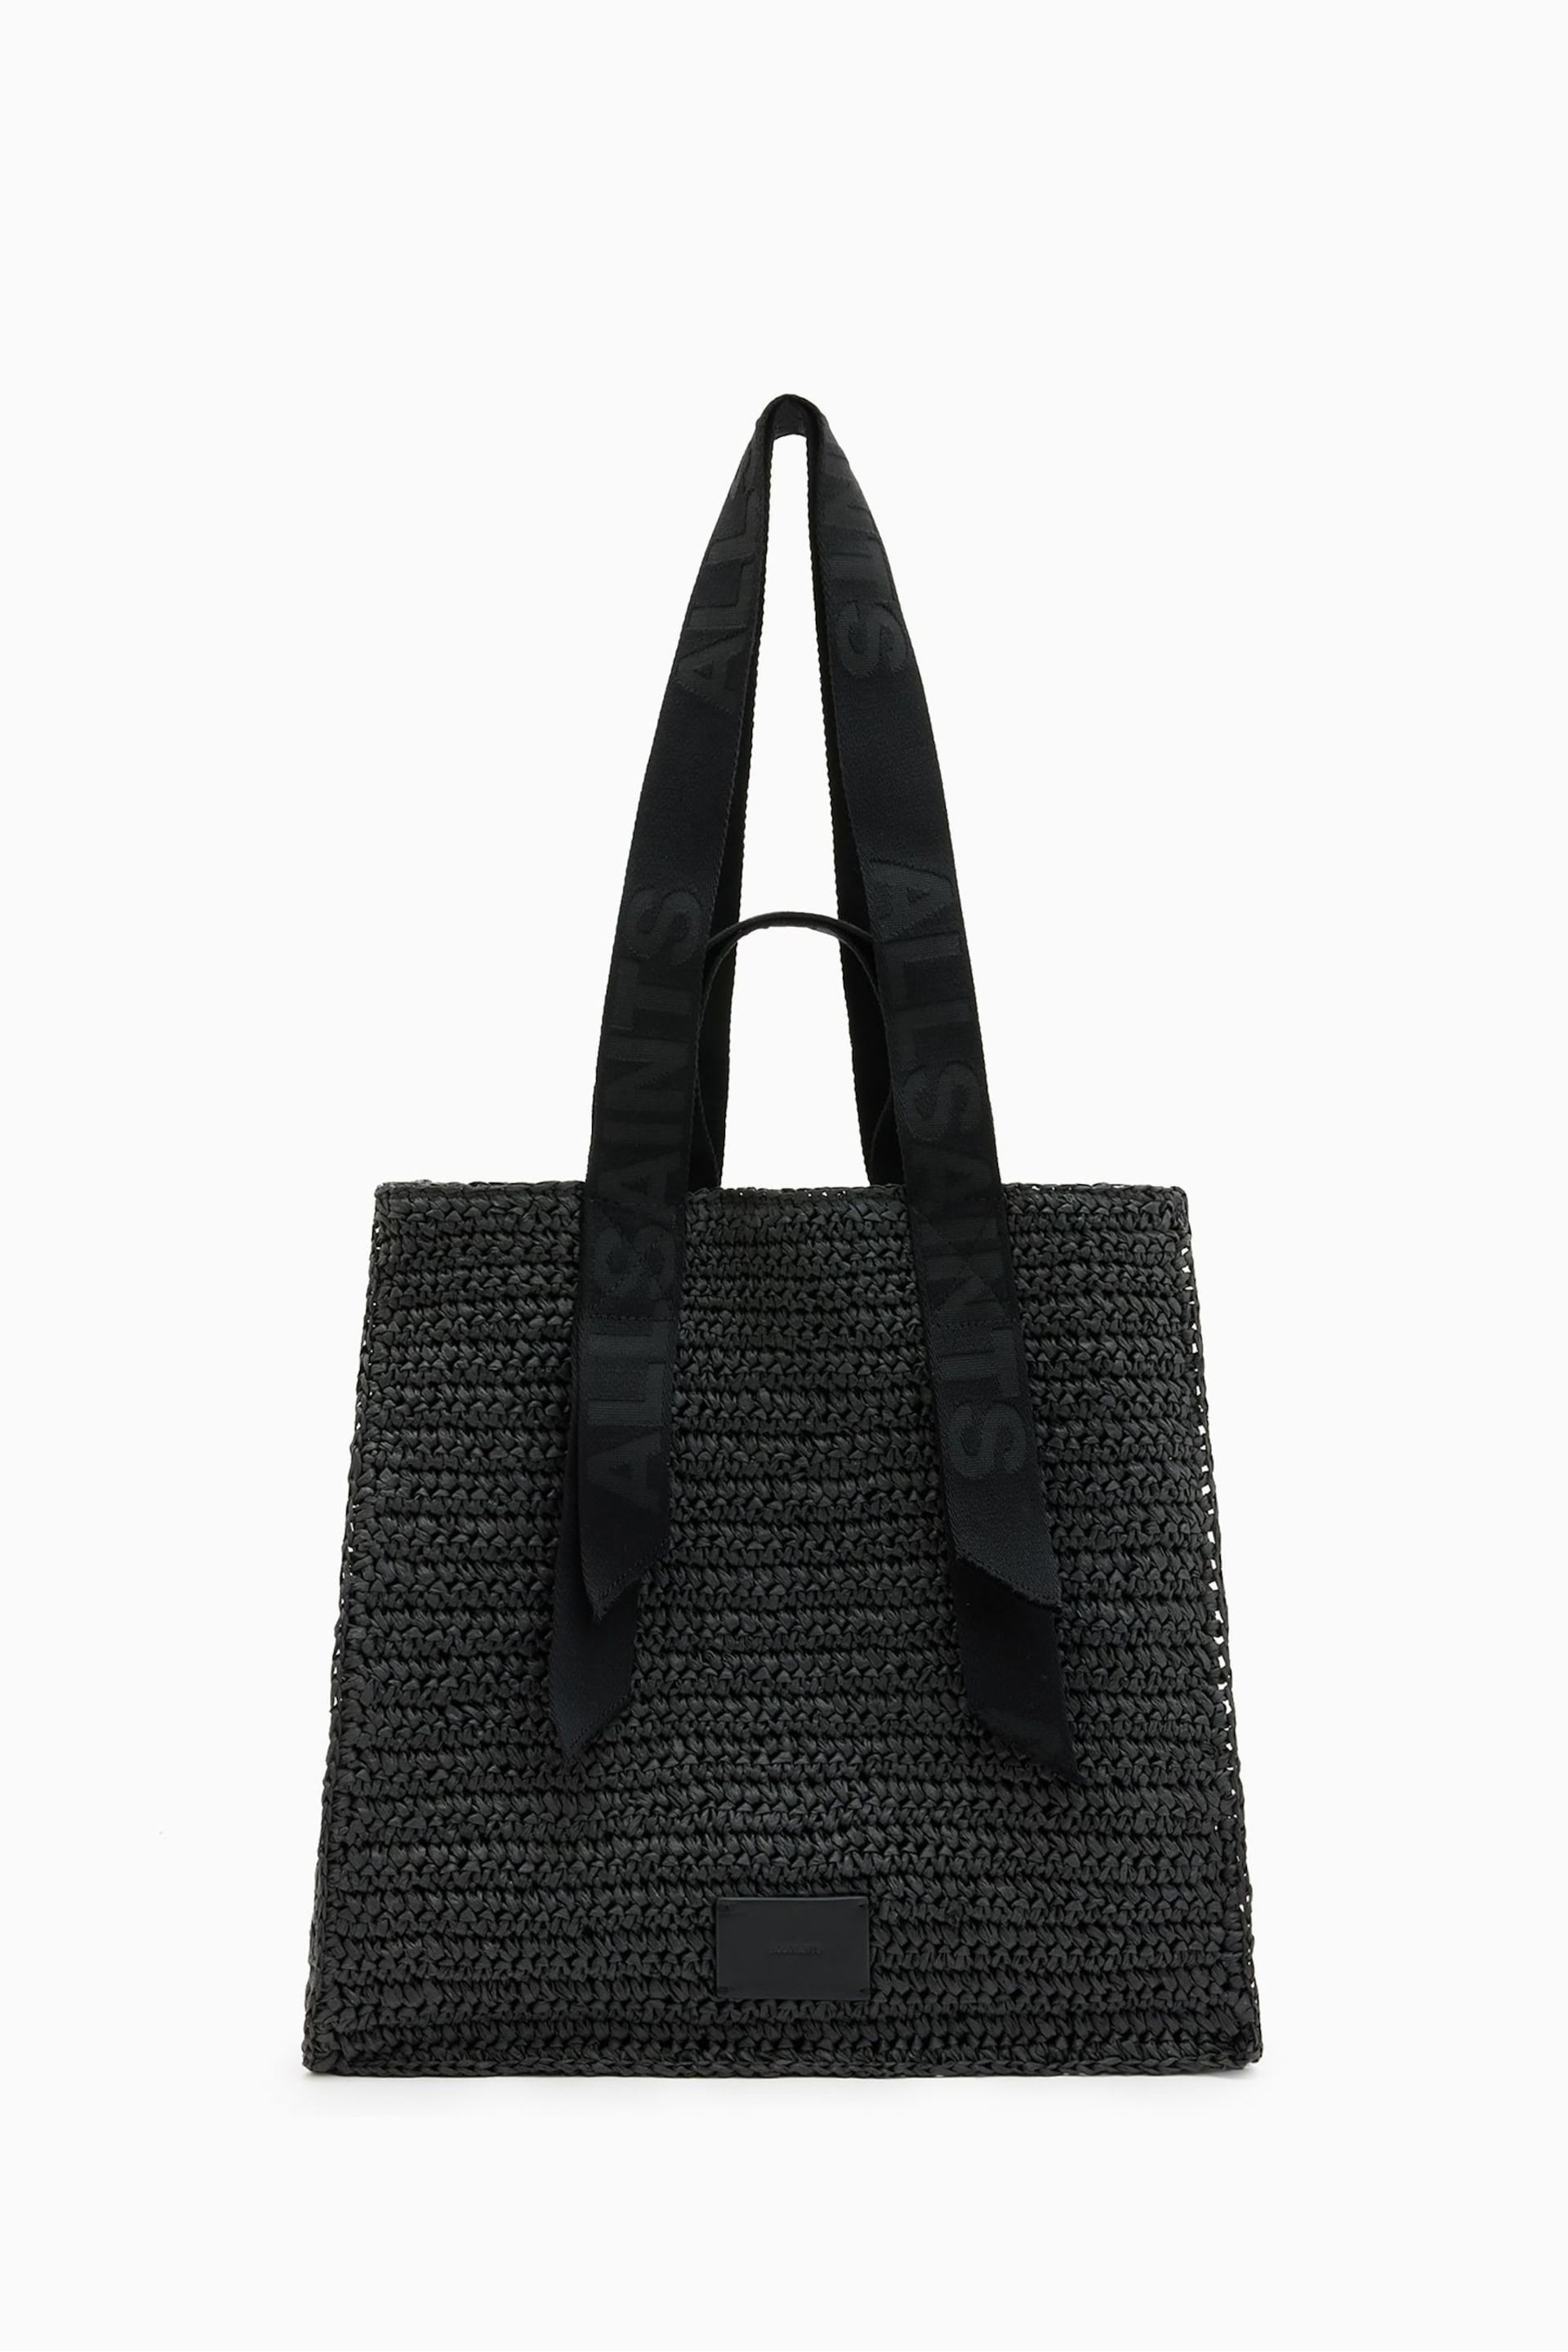 AllSaints Black Lullah N/S Tote Bag - Image 2 of 7